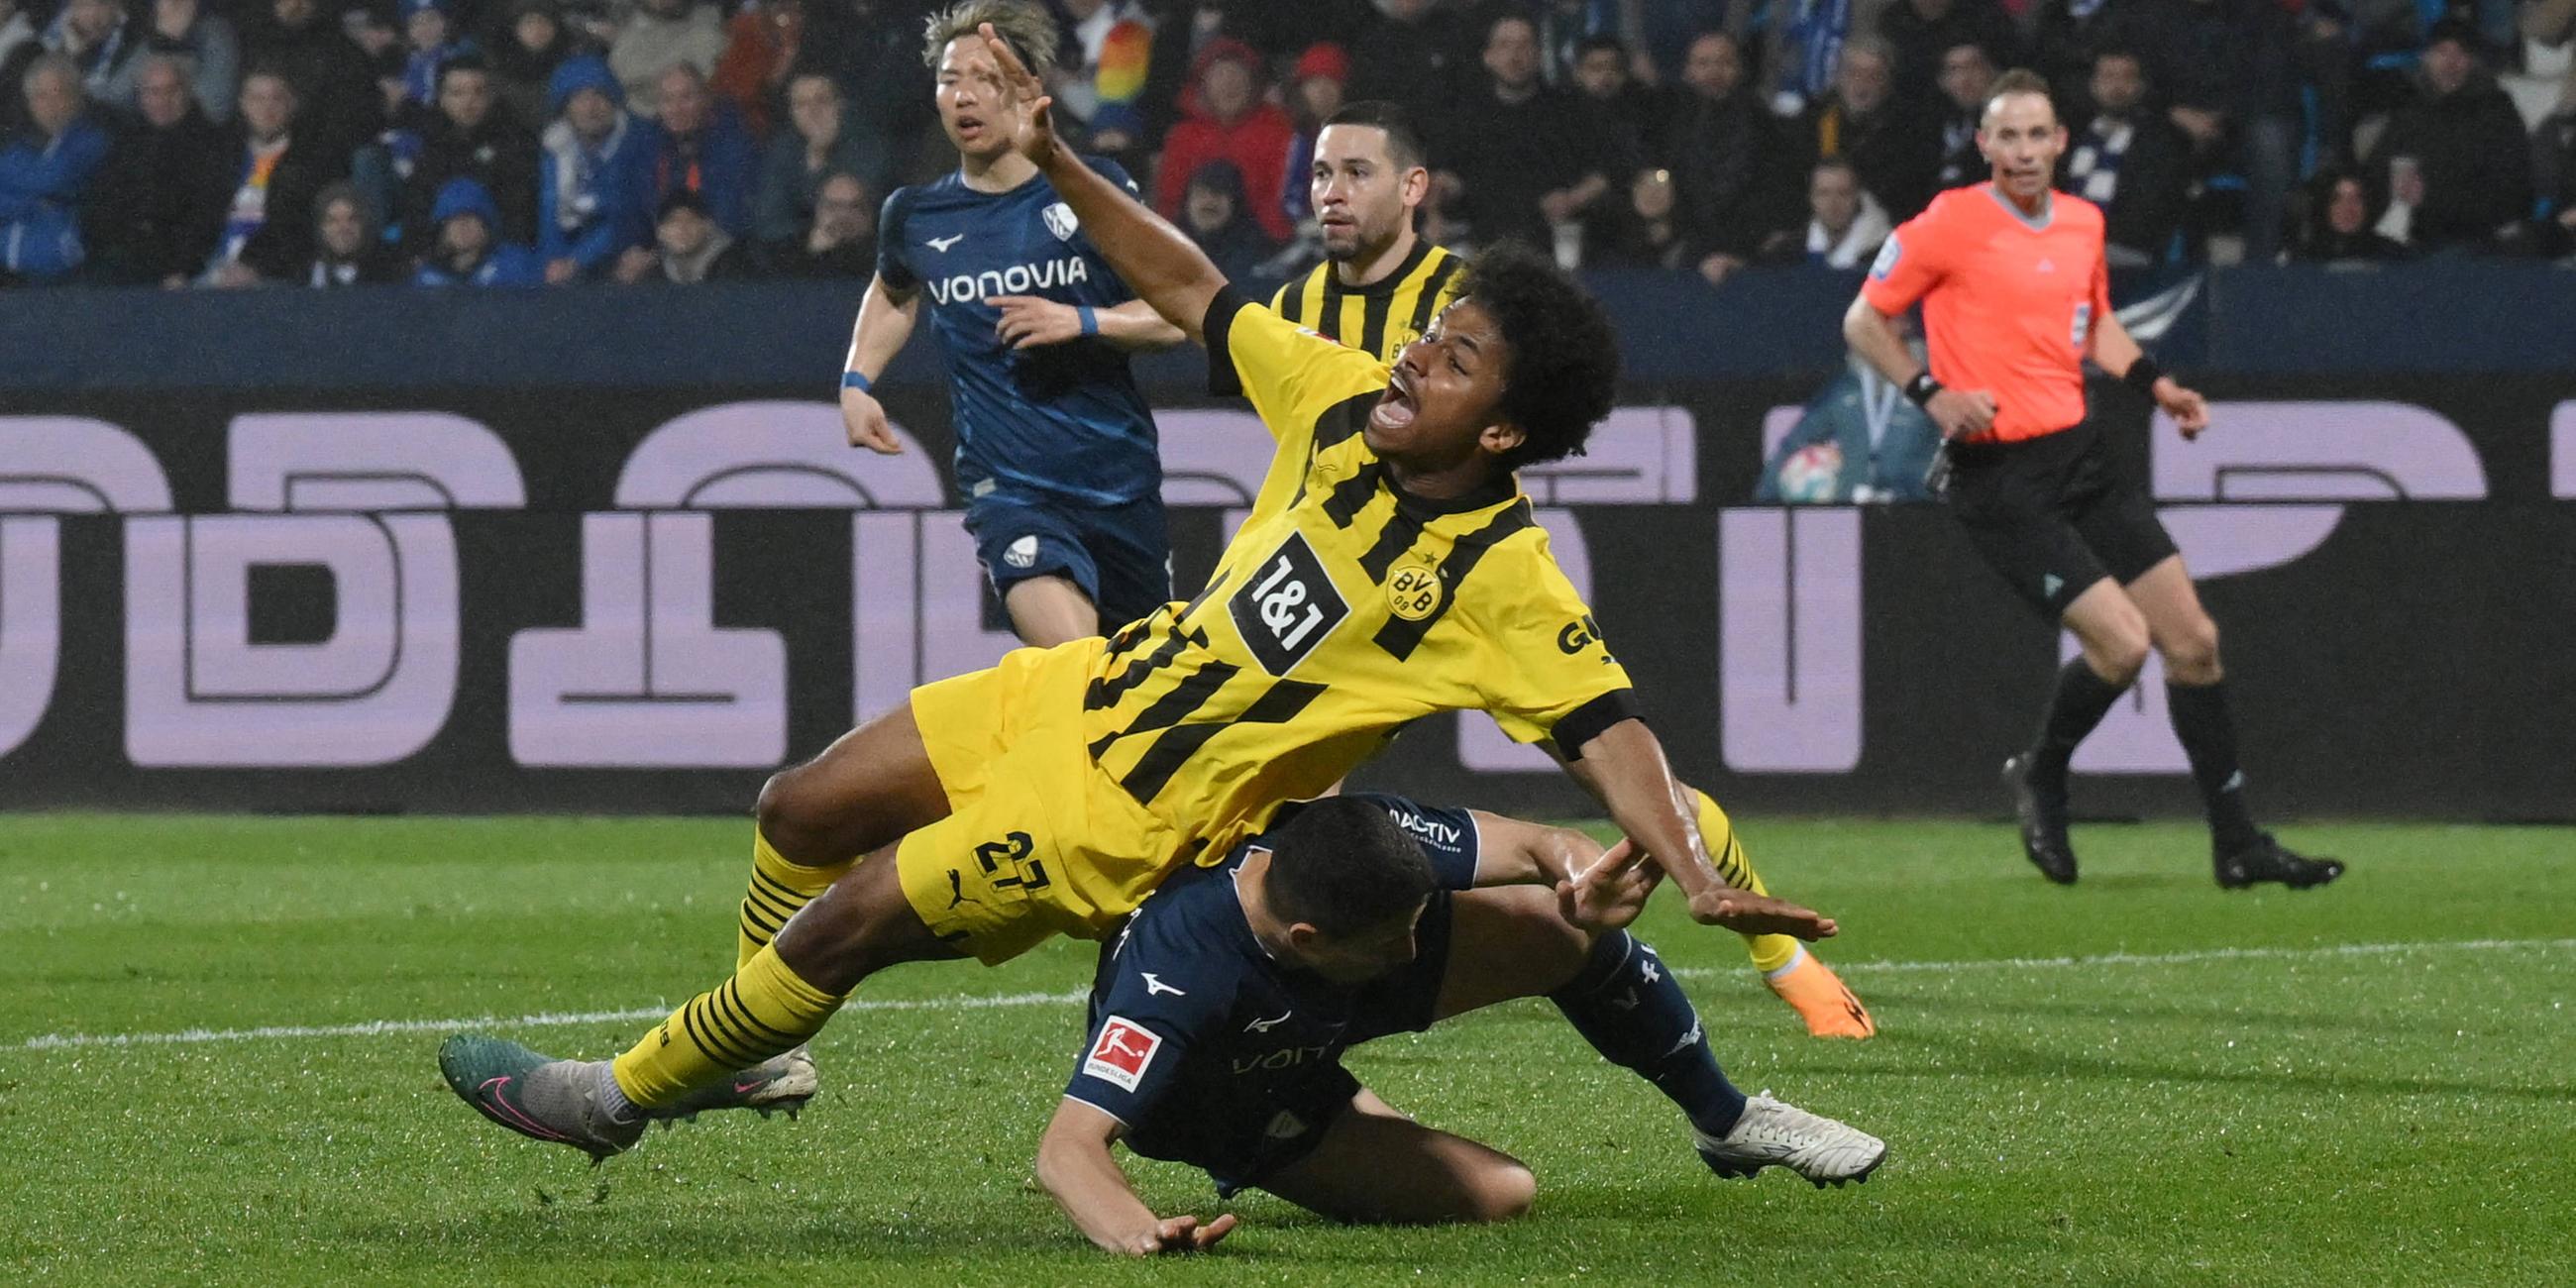 28.04.2023,  Saison 2022 2023, 1. Bundesliga, 30. Spieltag, VfL Bochum - Borussia Dortmund, Karim Adeyemi foult Danilo Soares